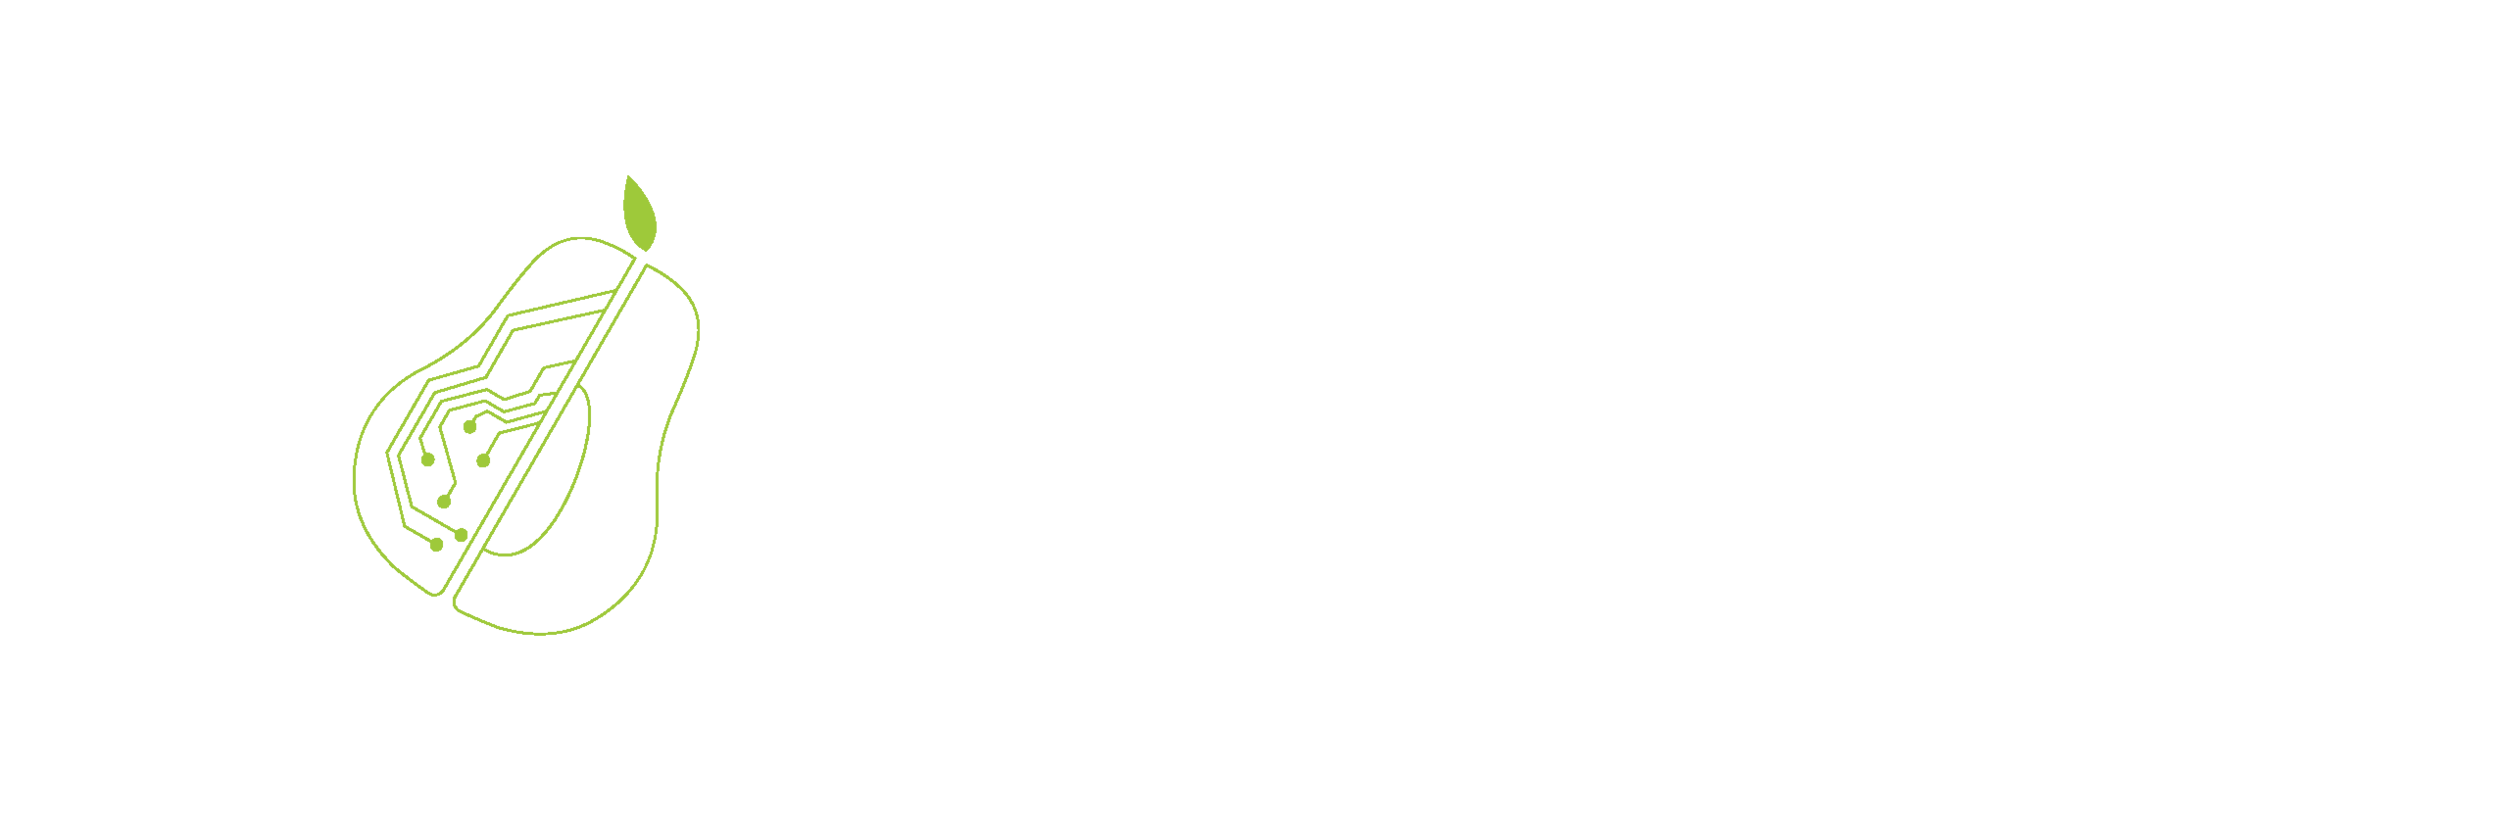 Digital Twin Corporation